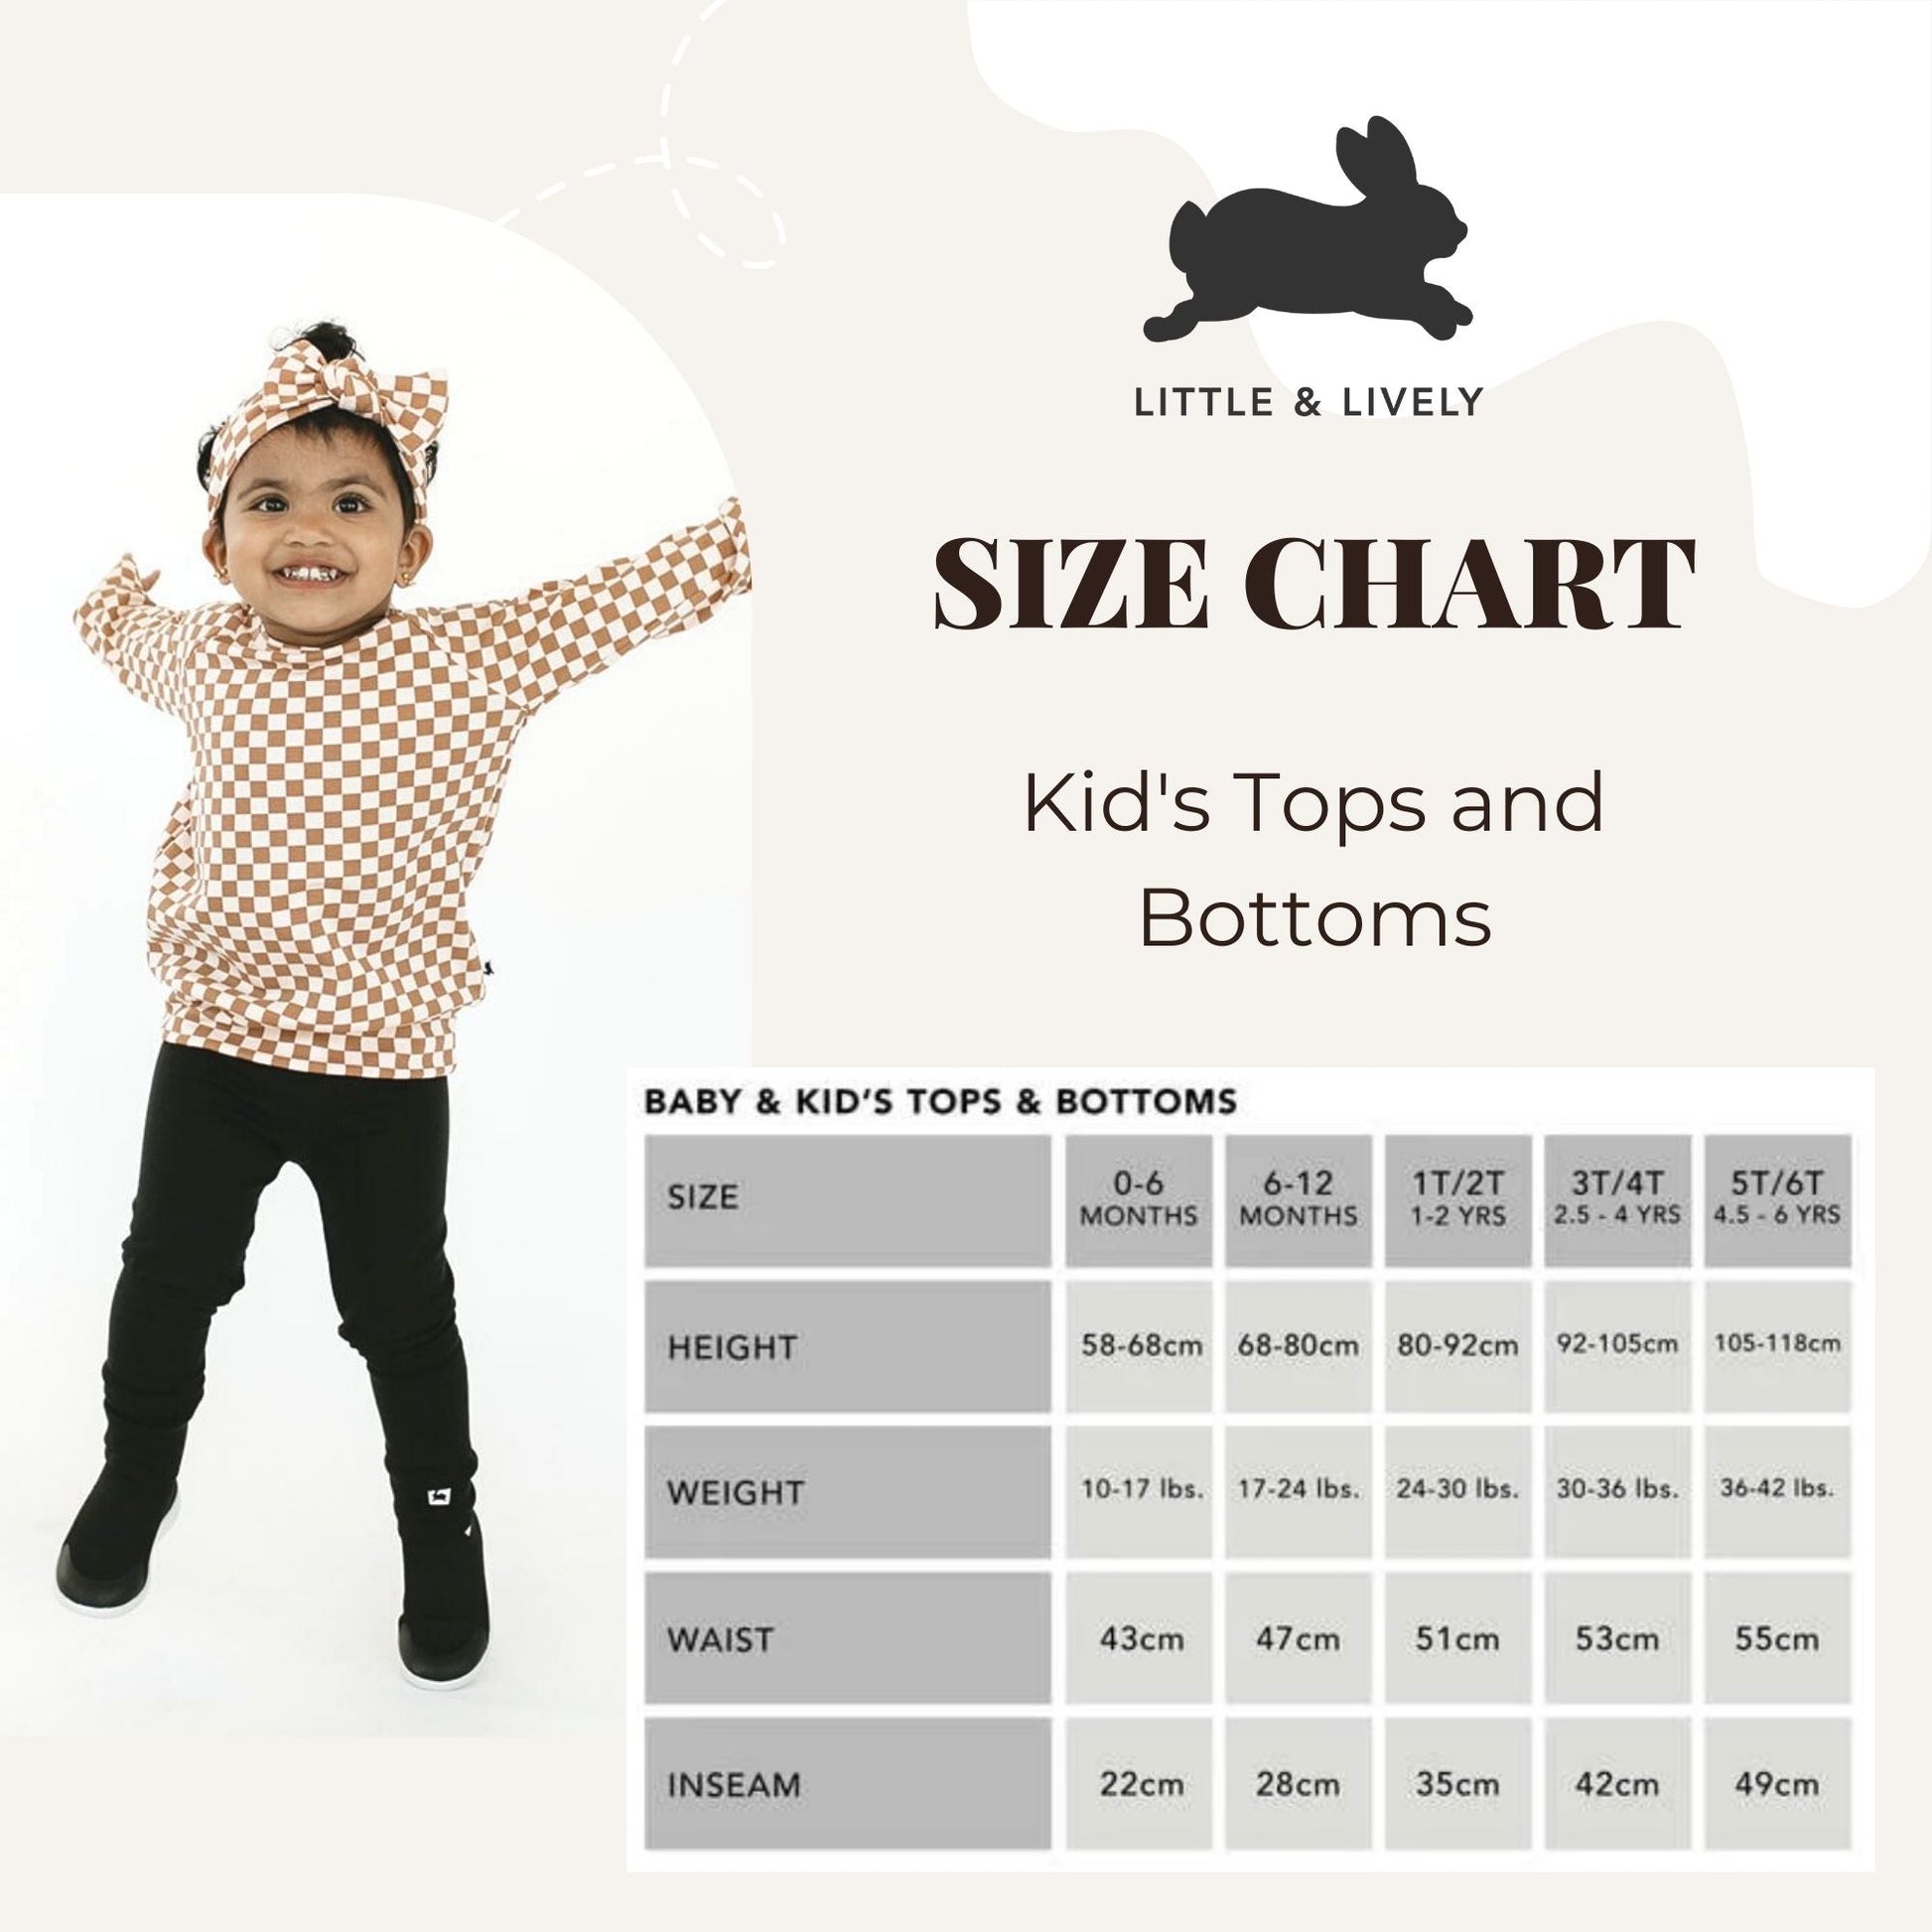 Baby/Kid's/Youth Ringer Slim-Fit T-Shirt | Caramel